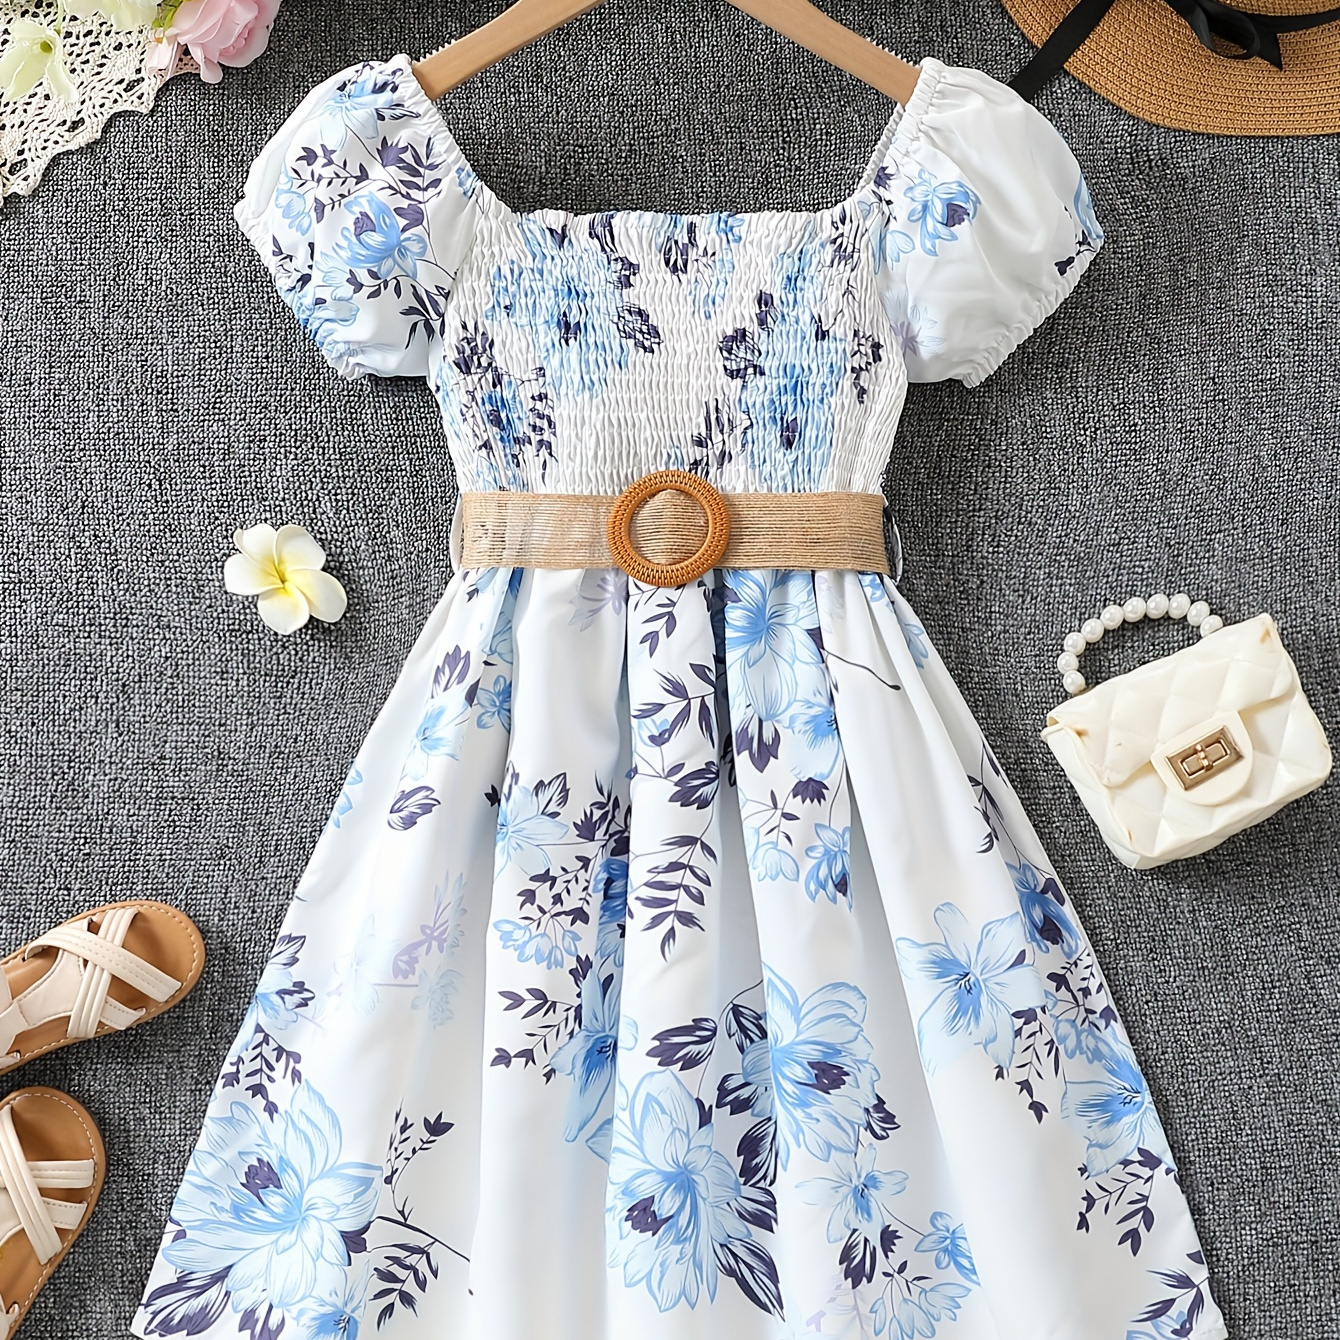 

Girls Puff Sleeve Fresh Floral Print Belt Dress Sweet & Fashion Short Sleeve Dress For Spring Summer